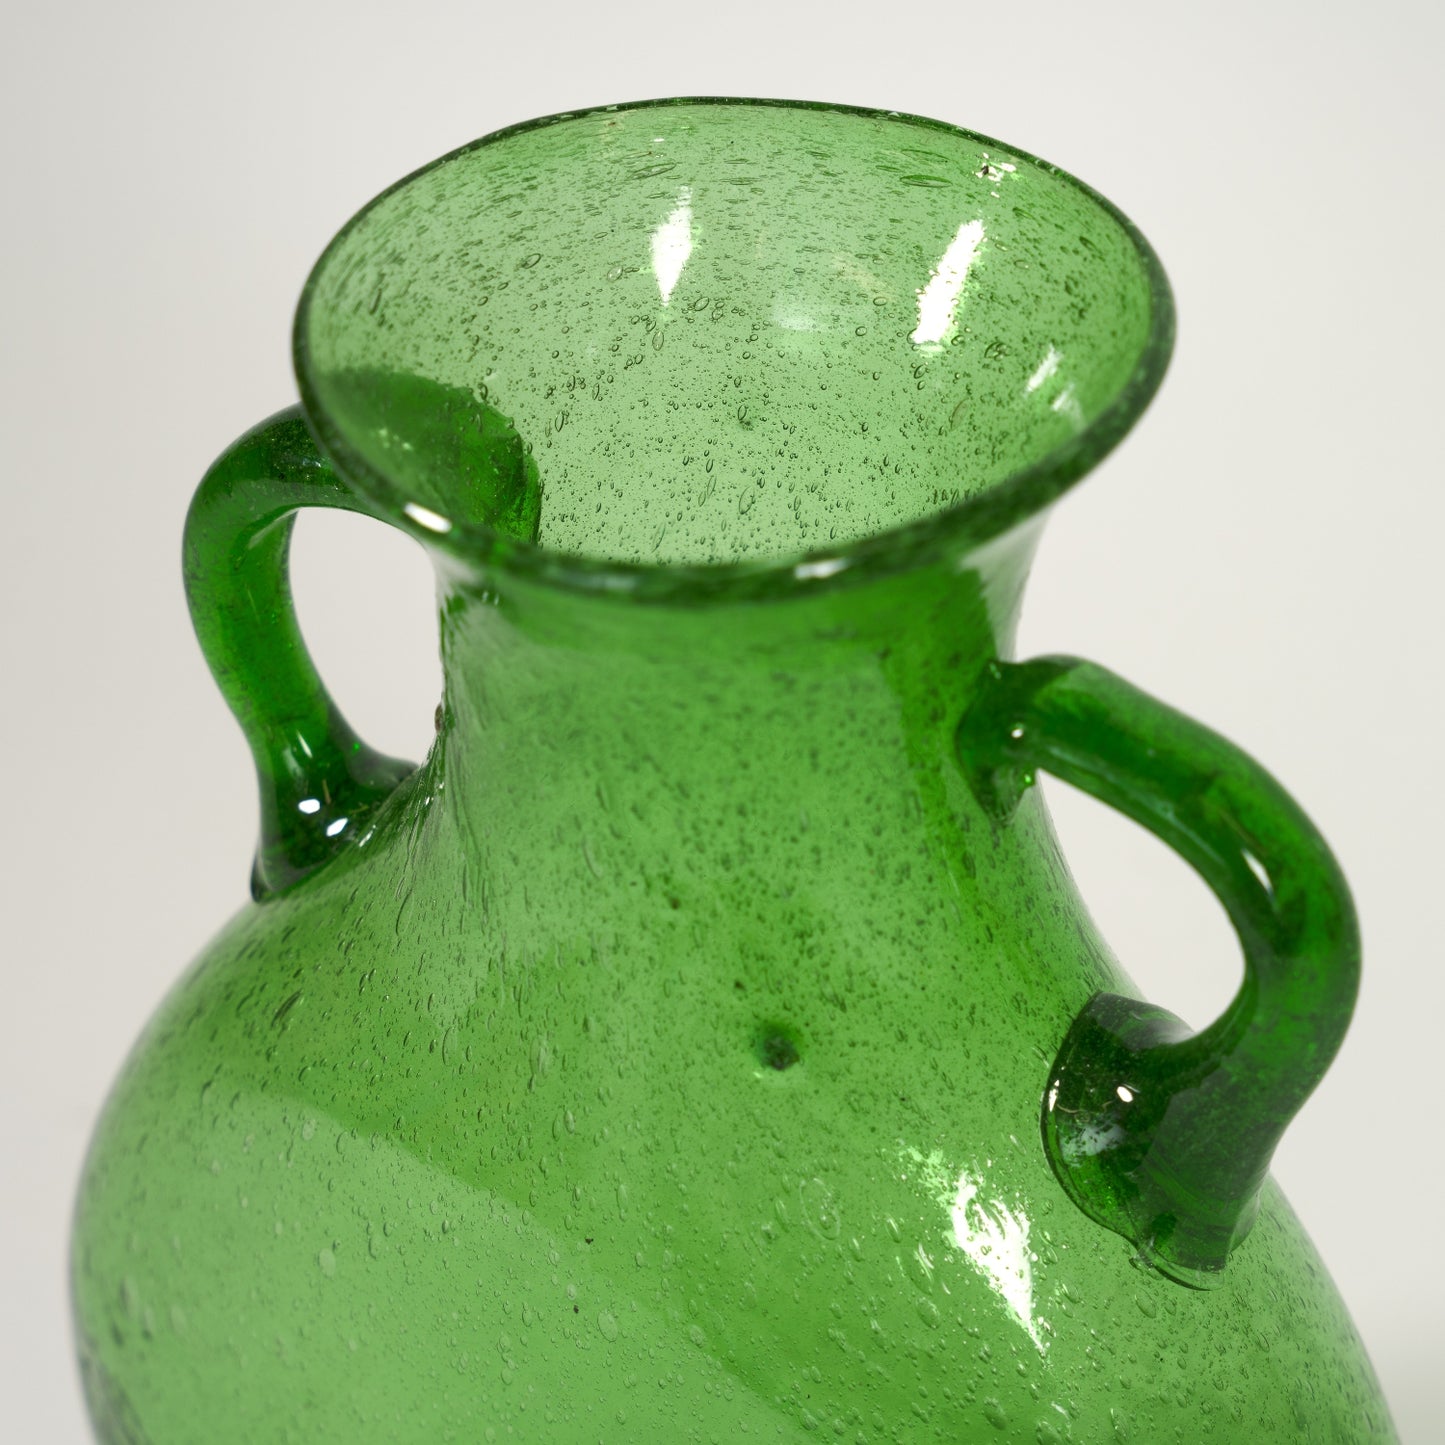 Amphora Green Vase